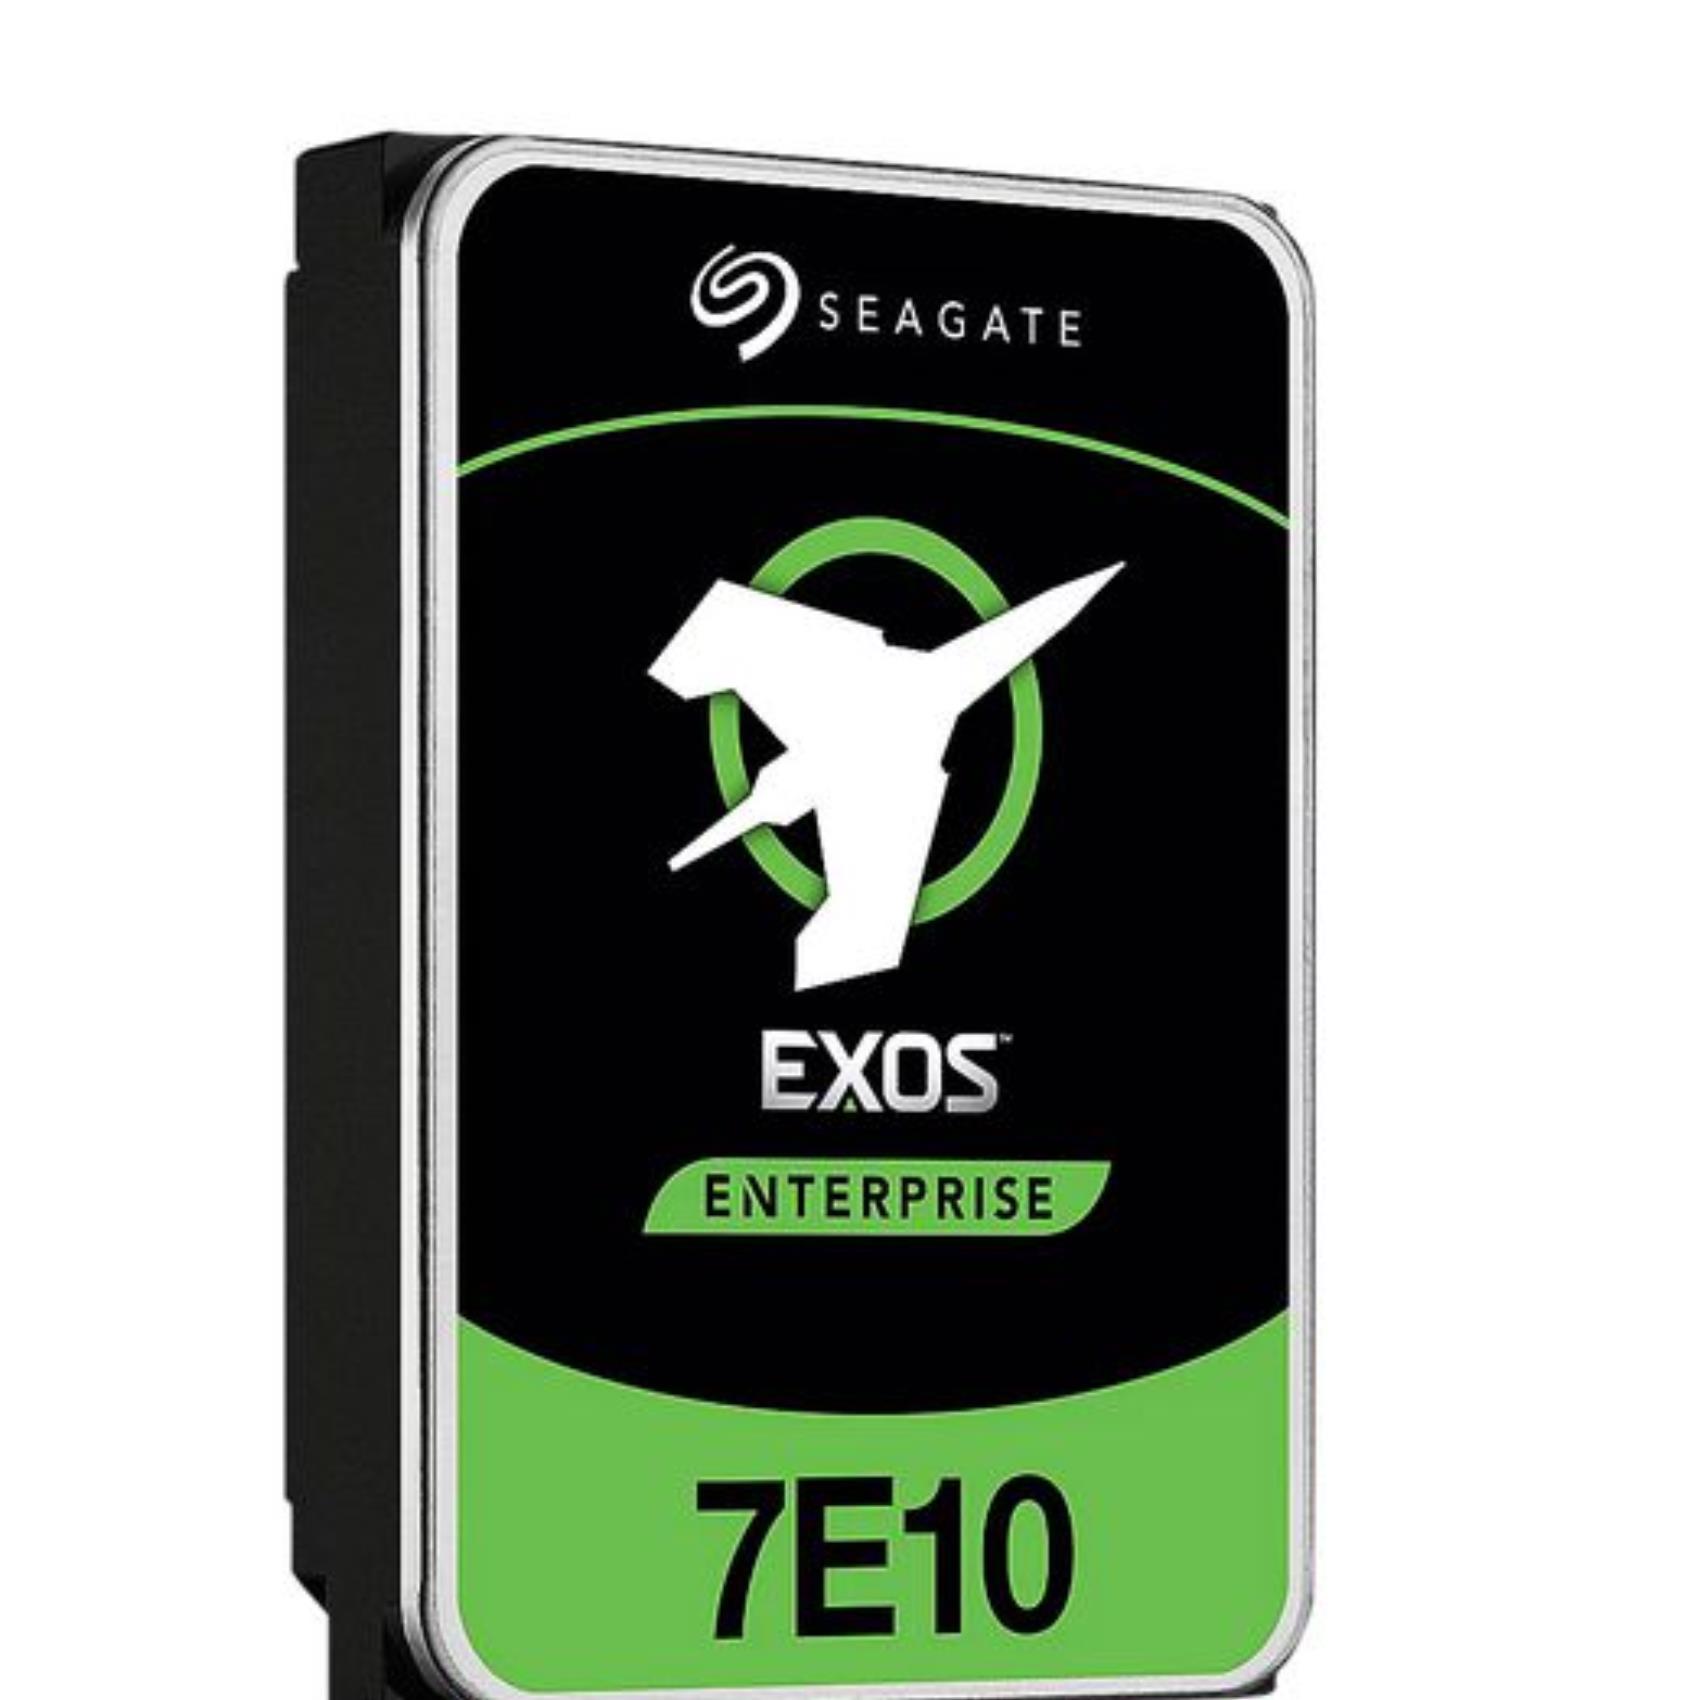 Image of SEAGATE 8TB EXOS 7E10 ENTERP. SATA 3.5 7200 ST8000NM017B